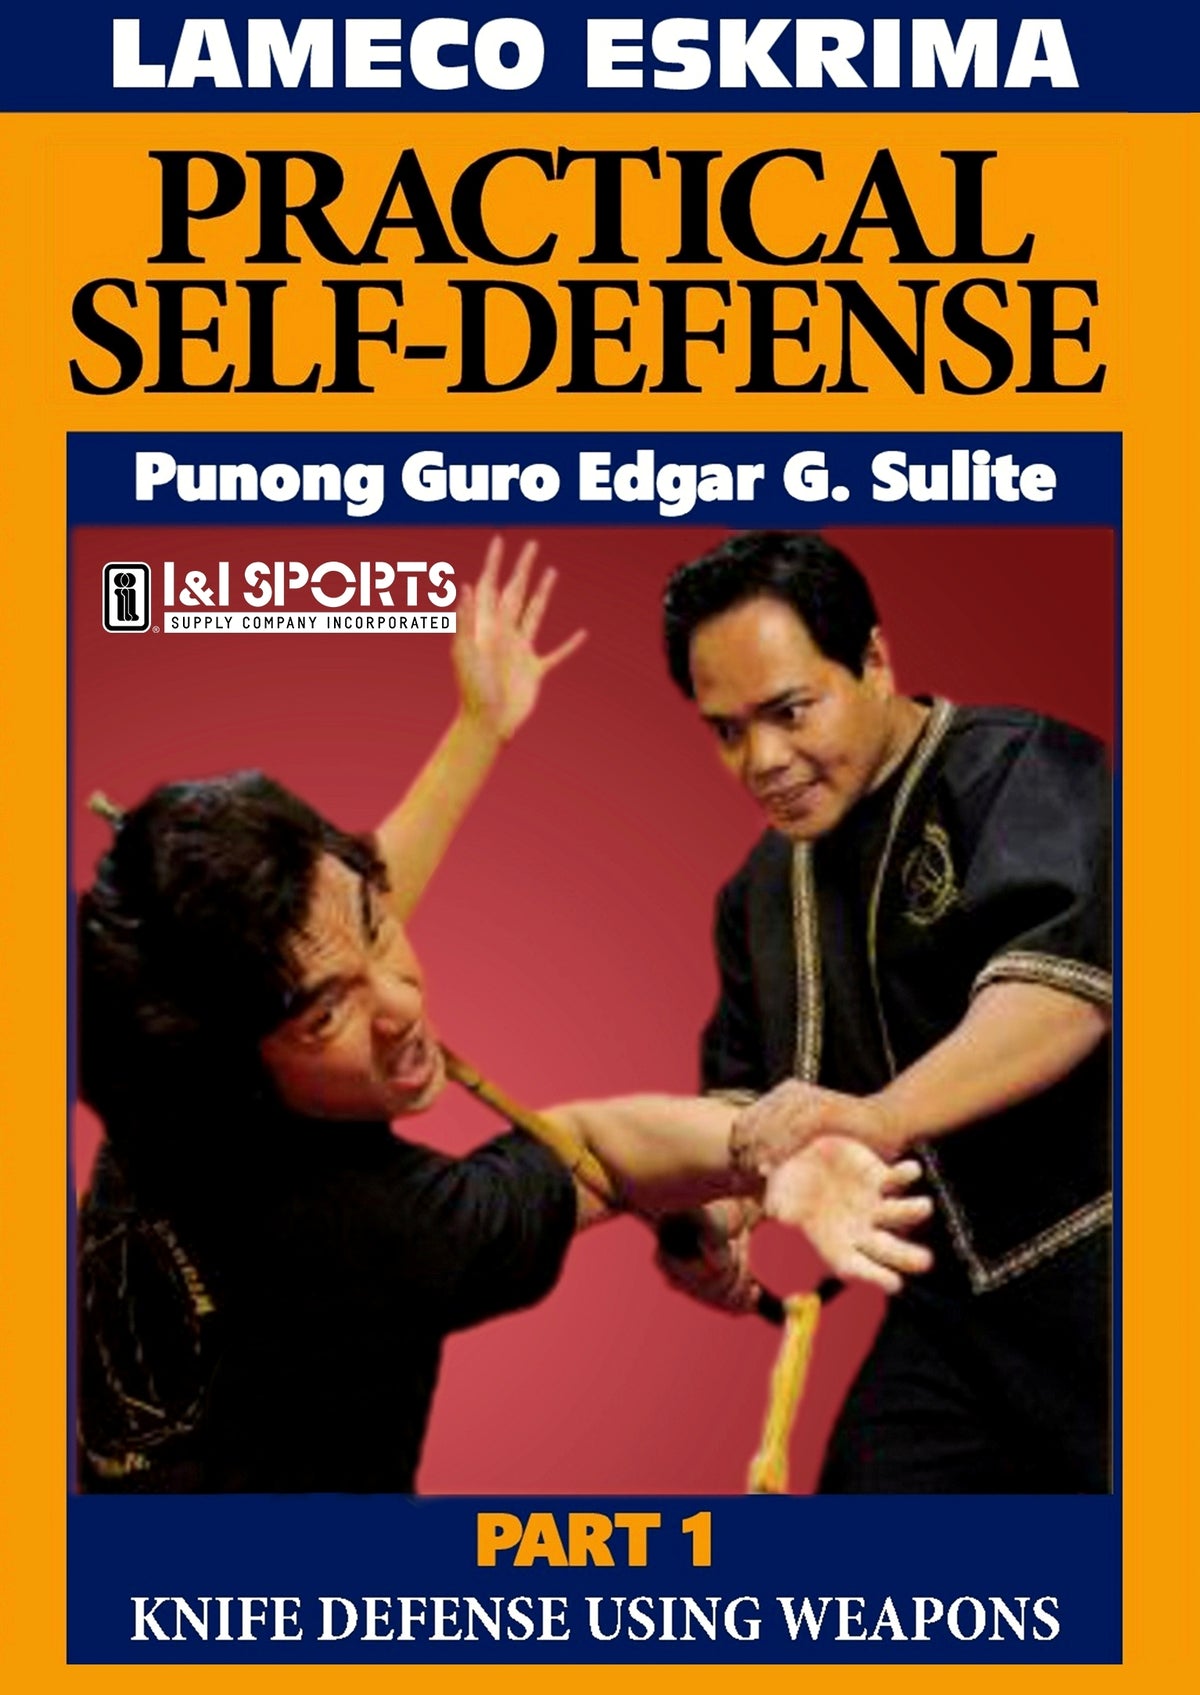 Lameco Eskrima Practical Self Defense #1 Knife Defense Weapons DVD Edgar Sulite